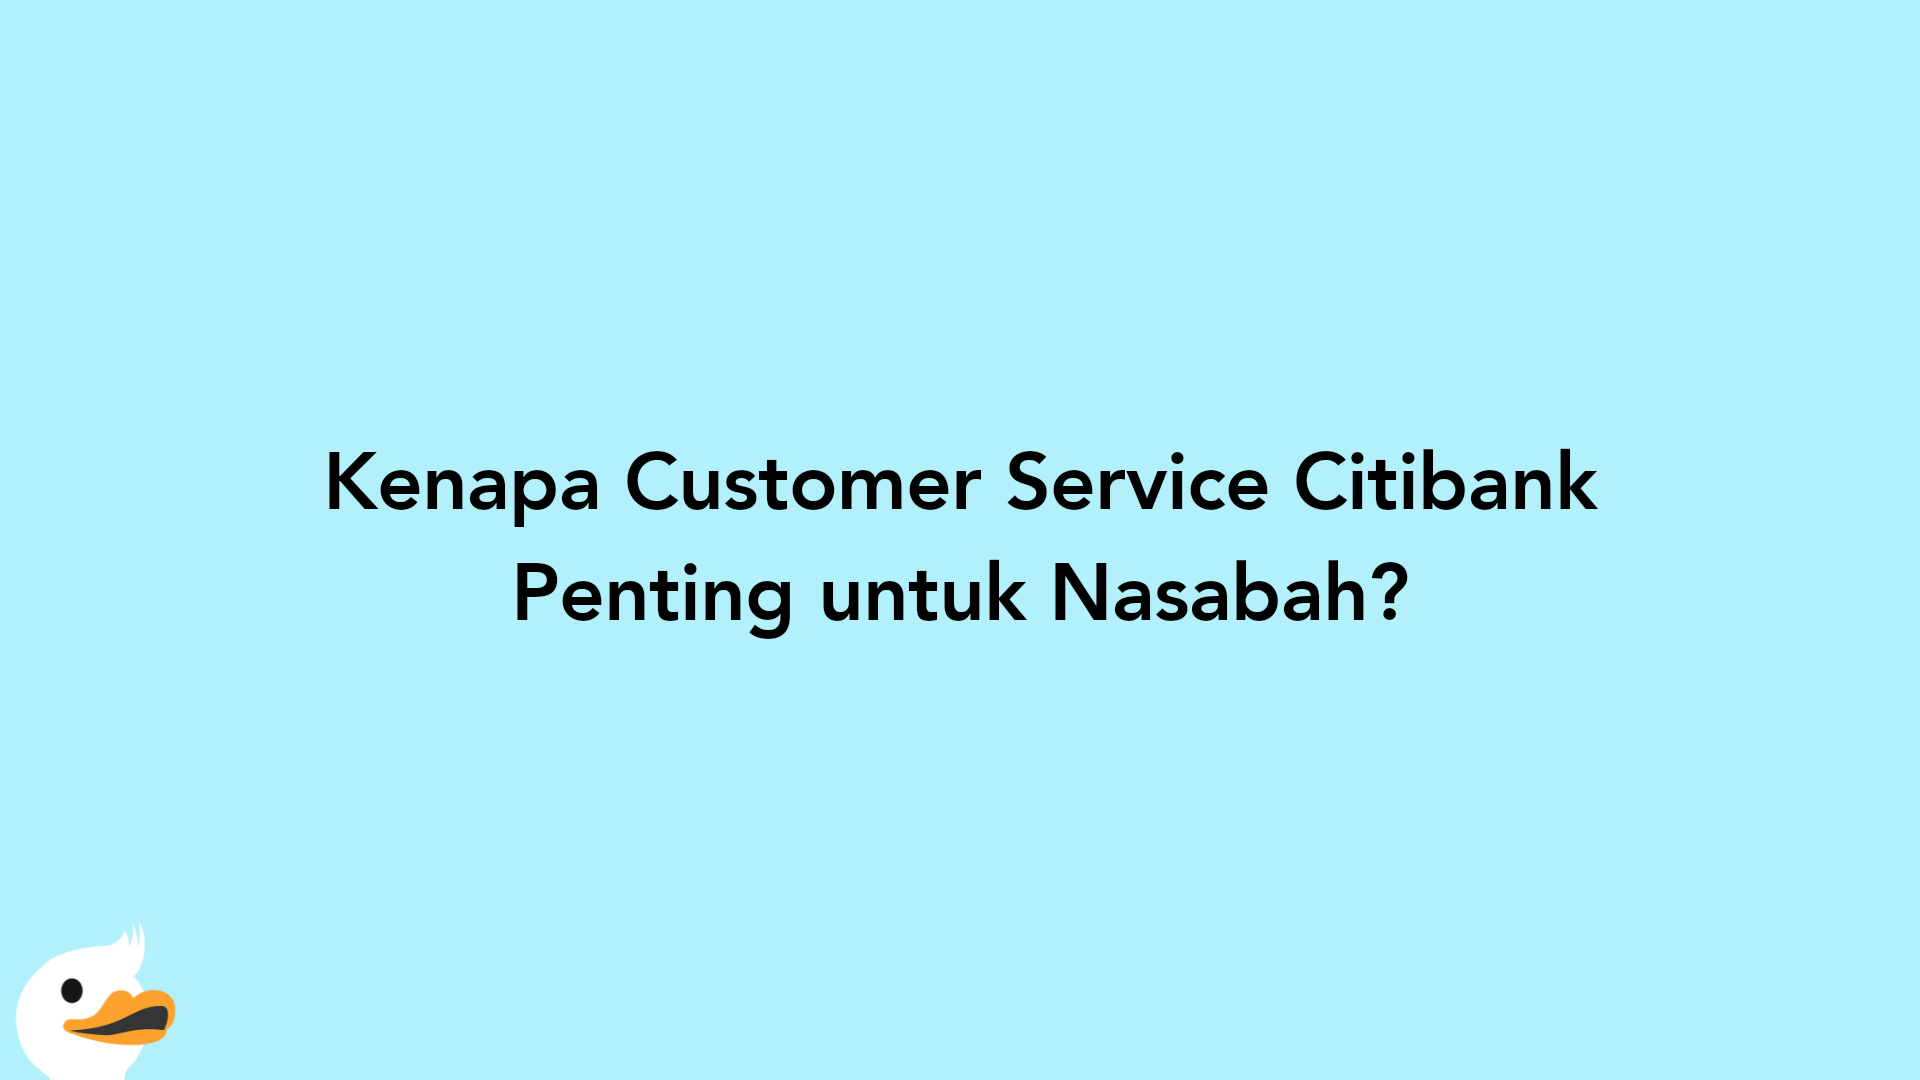 Kenapa Customer Service Citibank Penting untuk Nasabah?